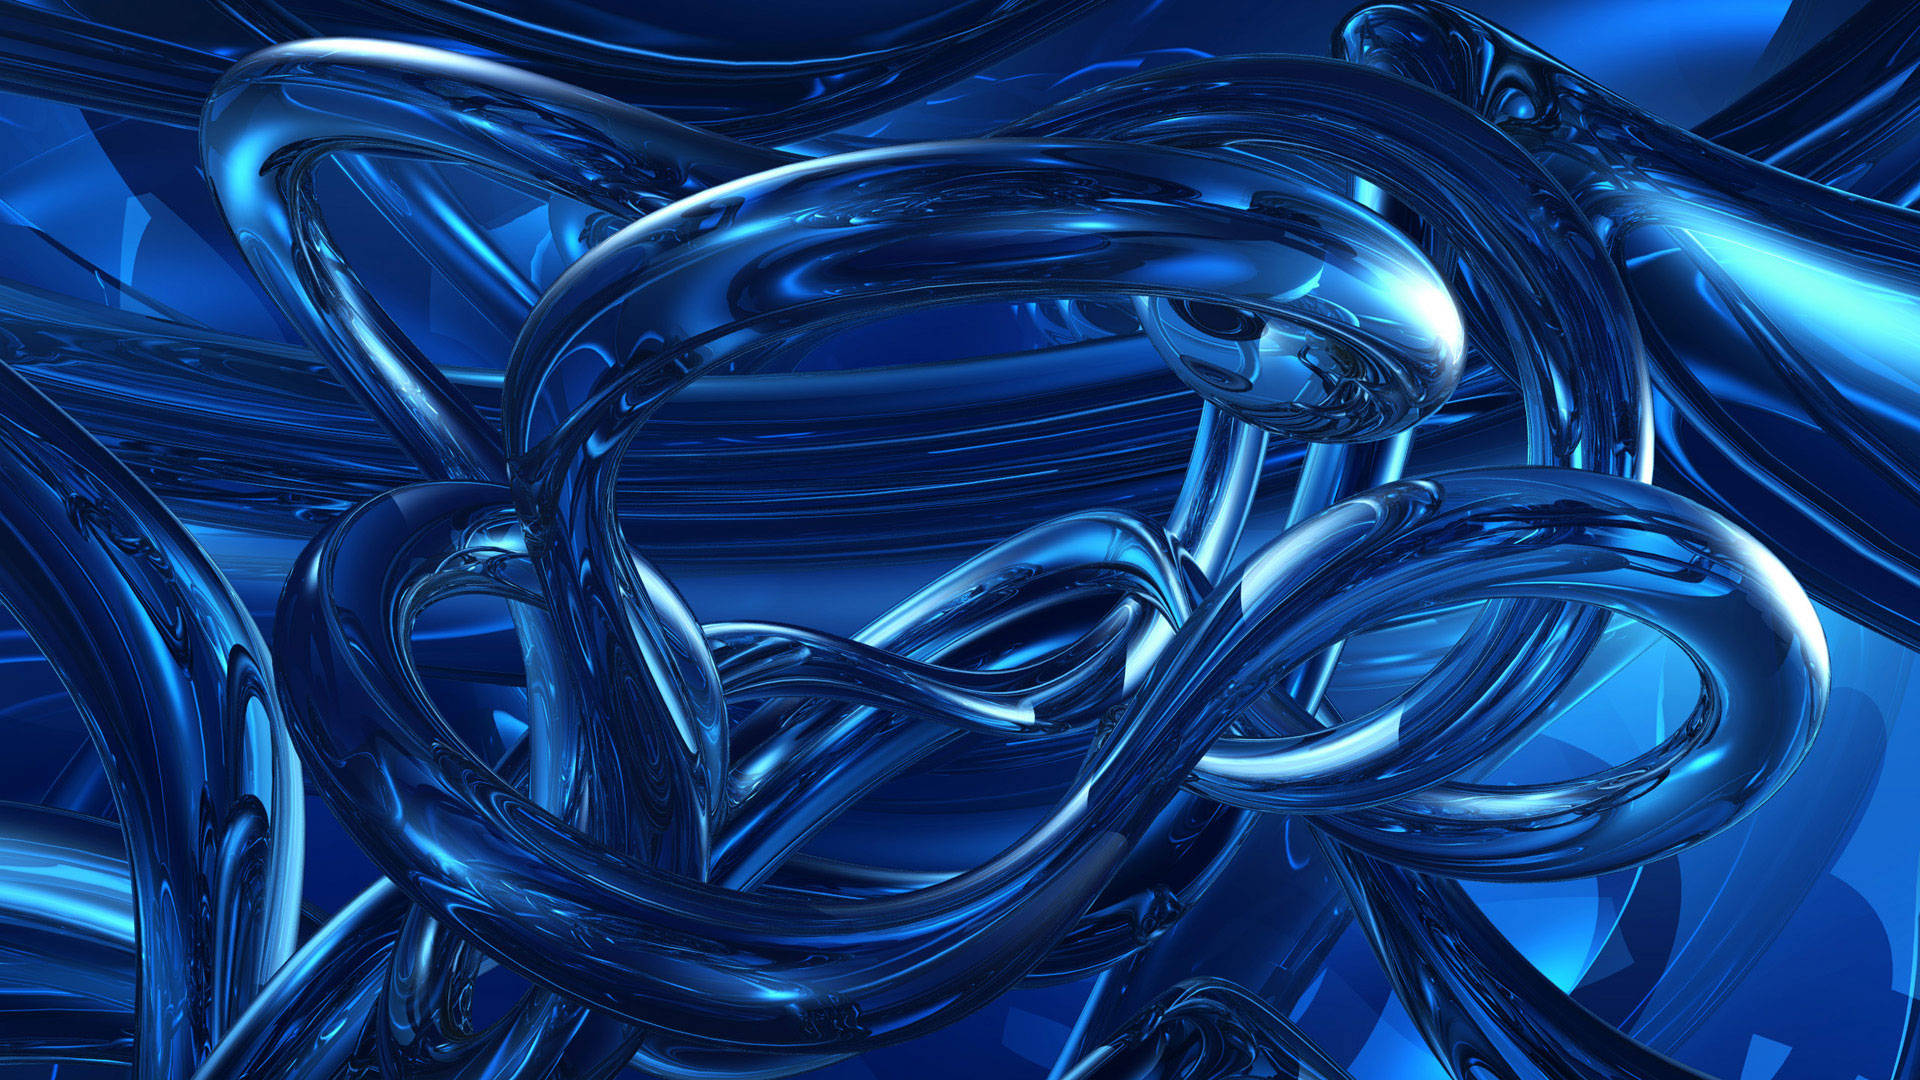 Neon Blue Aesthetic Metallic Coils Artwork Background